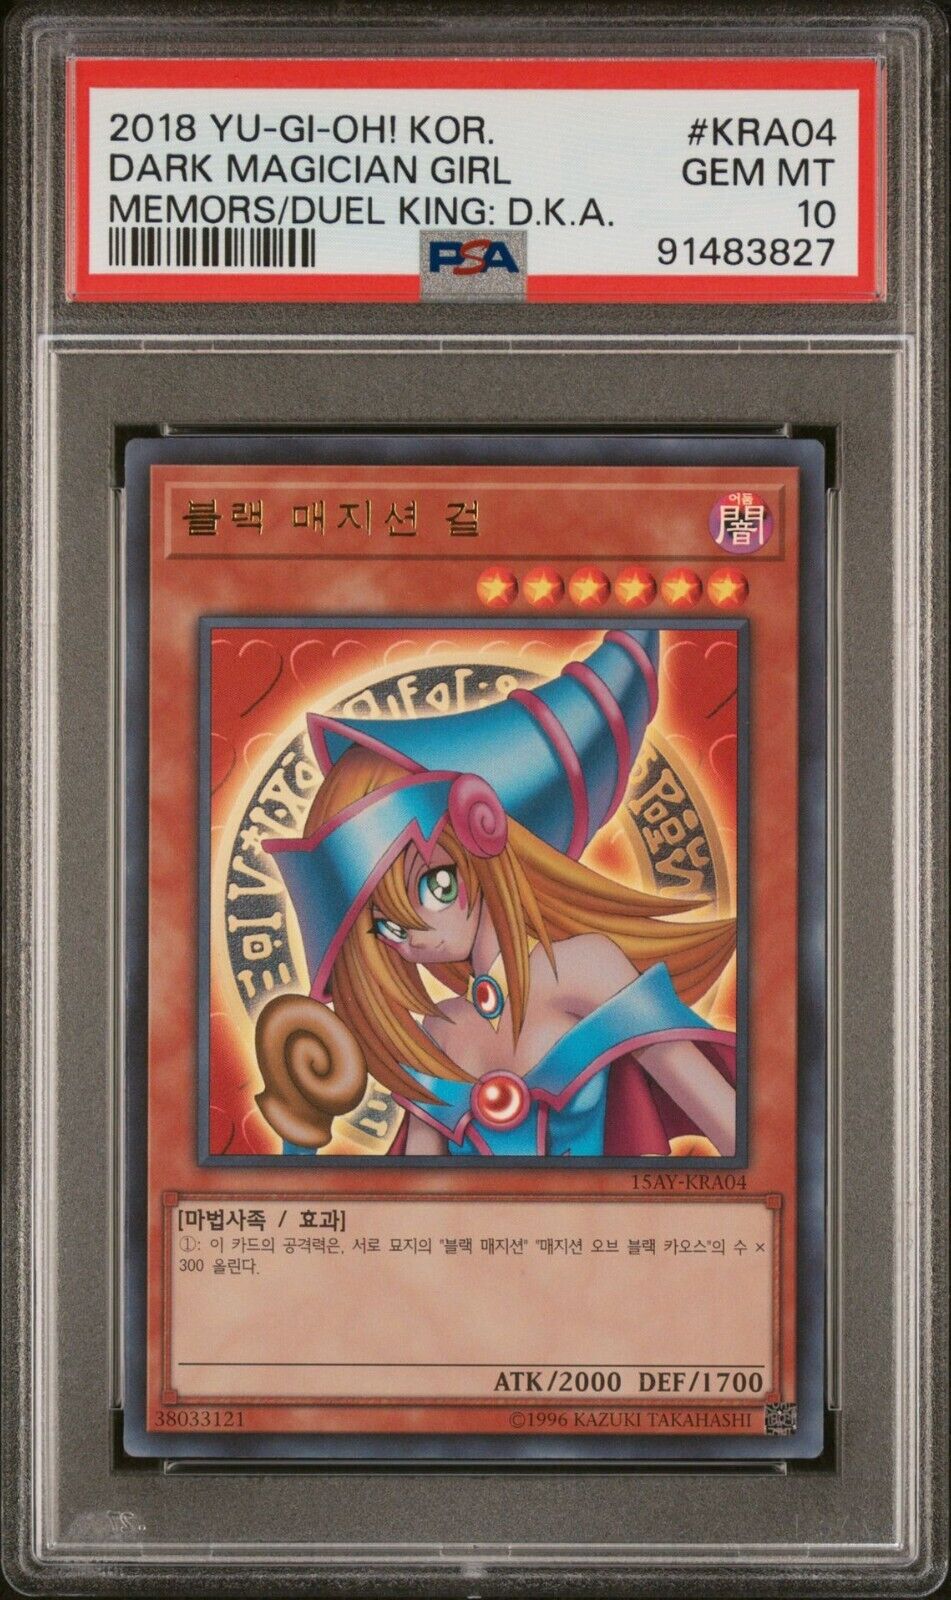 Yugioh Card Dark Magician Girl Ultra Rare Promo 15AY-KRA04 PSA 10